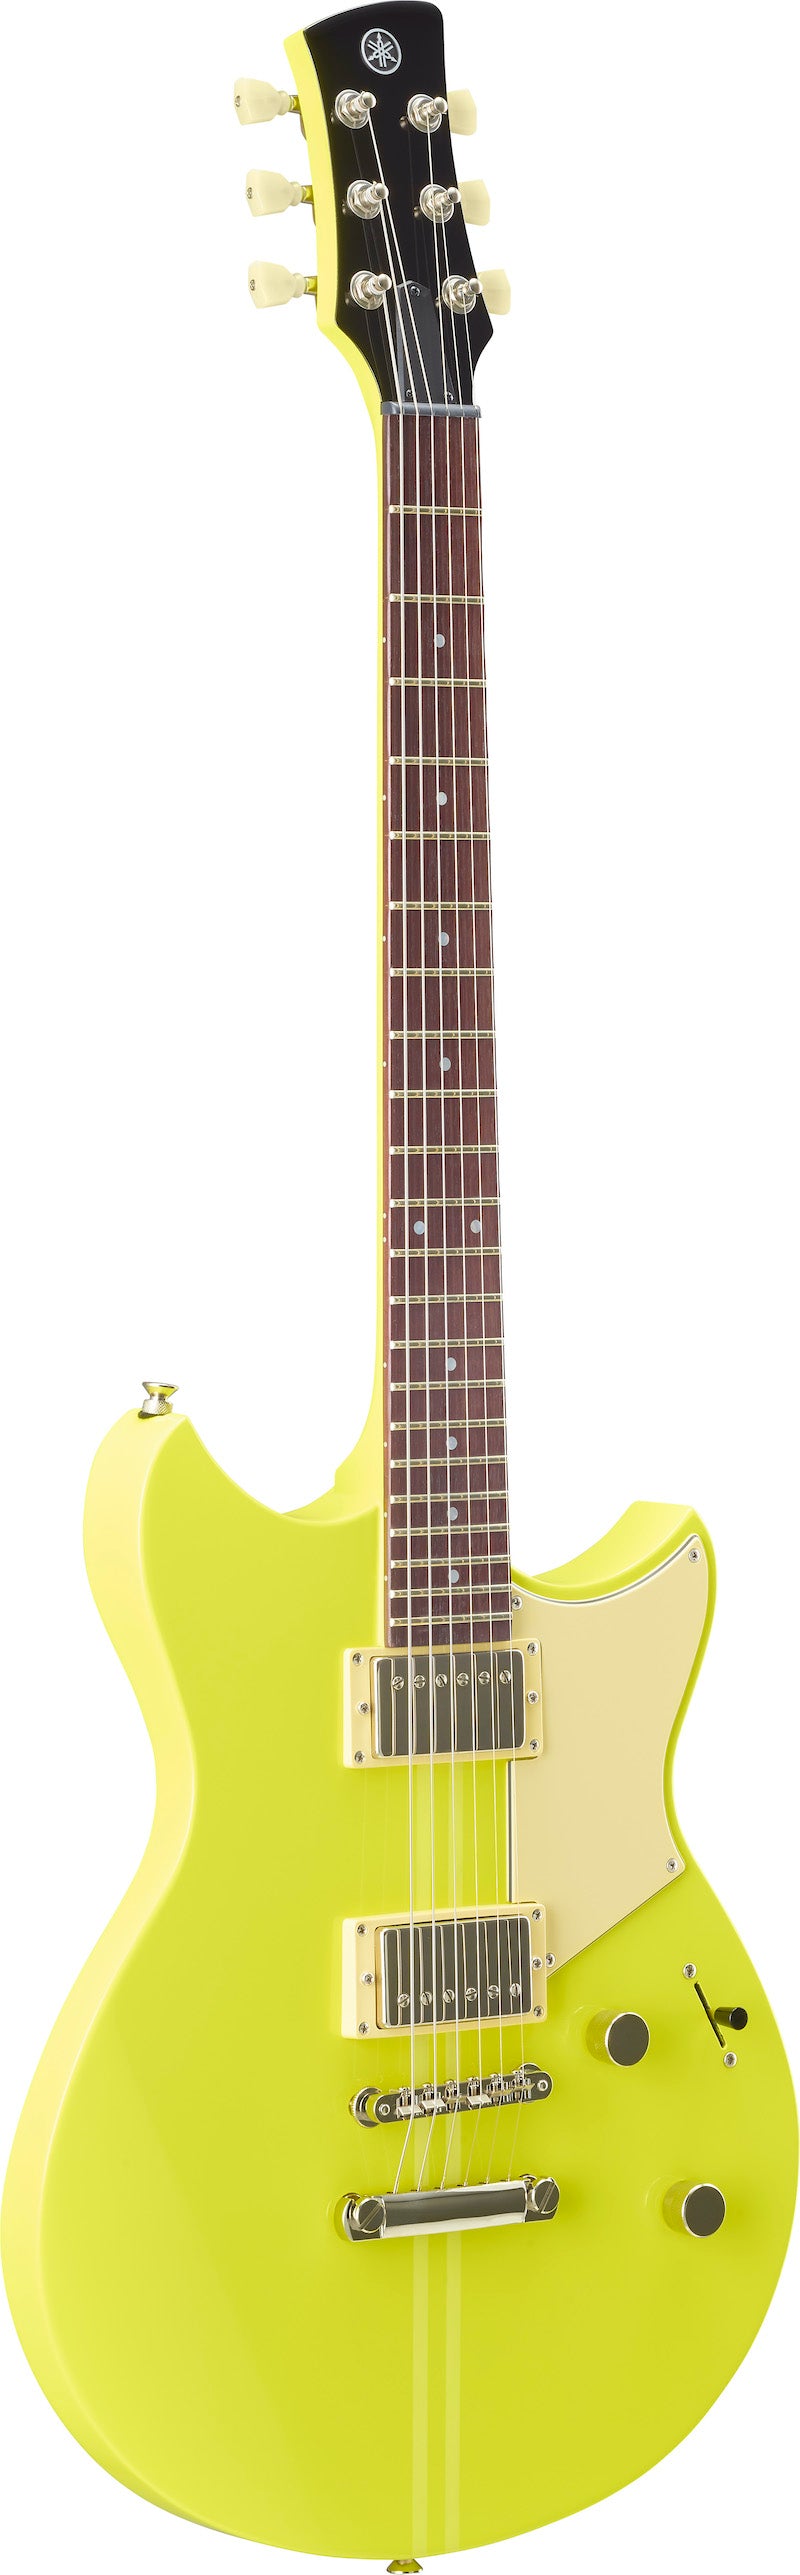 Yamaha Revstar RSE20 NY Electric Guitar - Neon Yellow